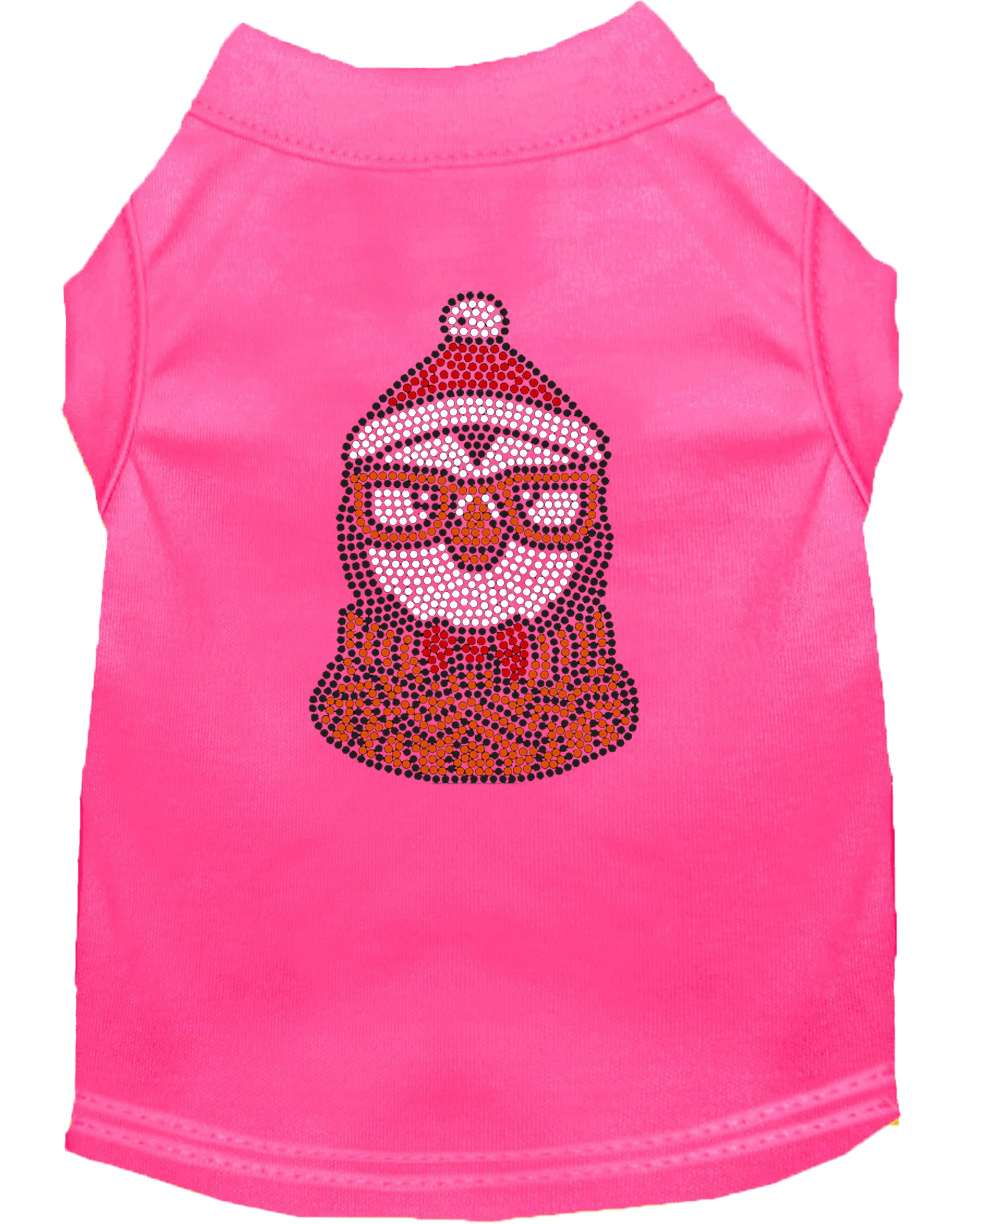 Hipster Penguin Rhinestone Dog Shirt Bright Pink XXXL